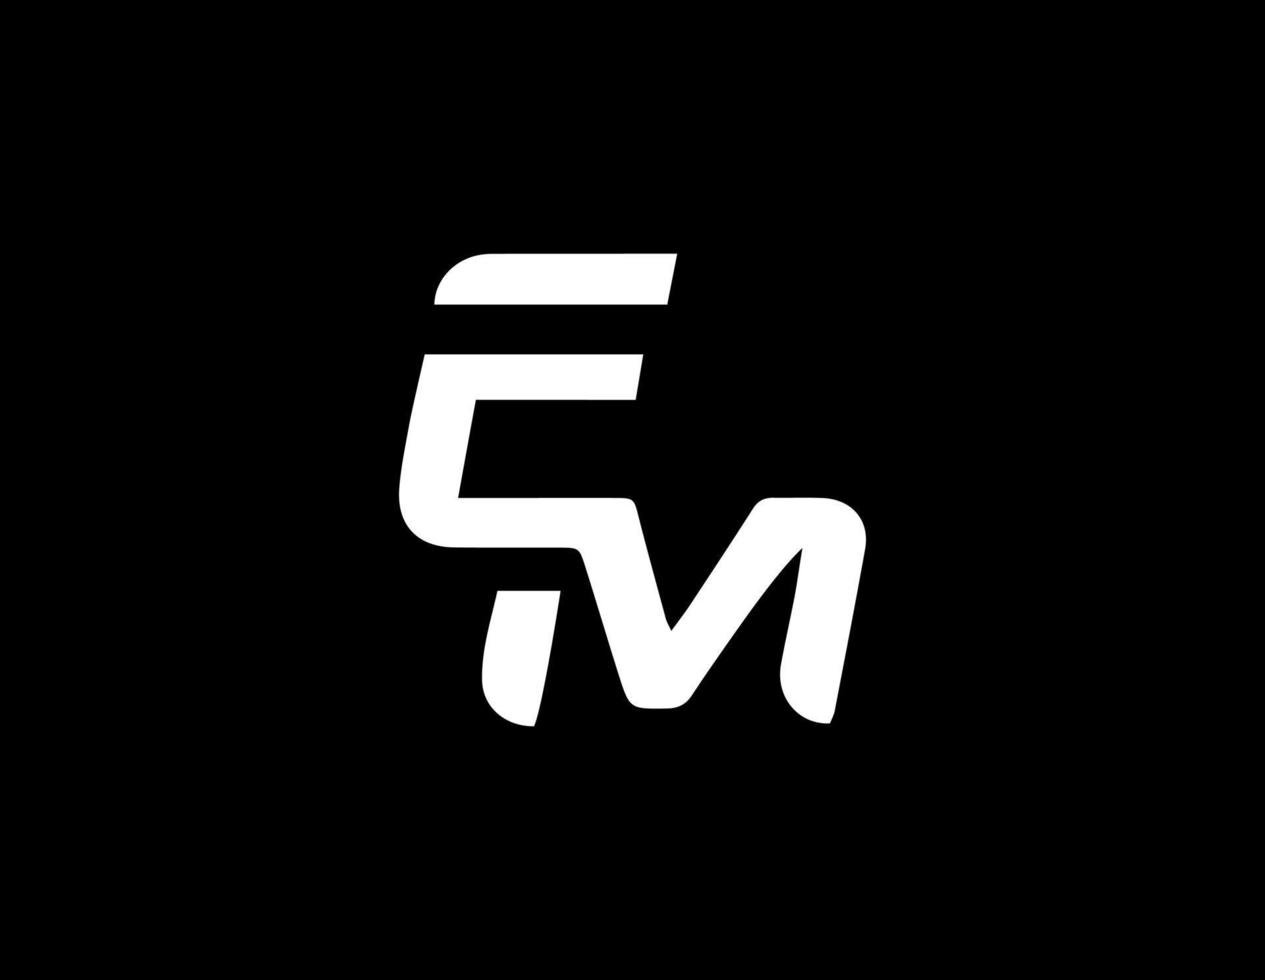 ME, EM, M, E abstract letters logo monogram design vector